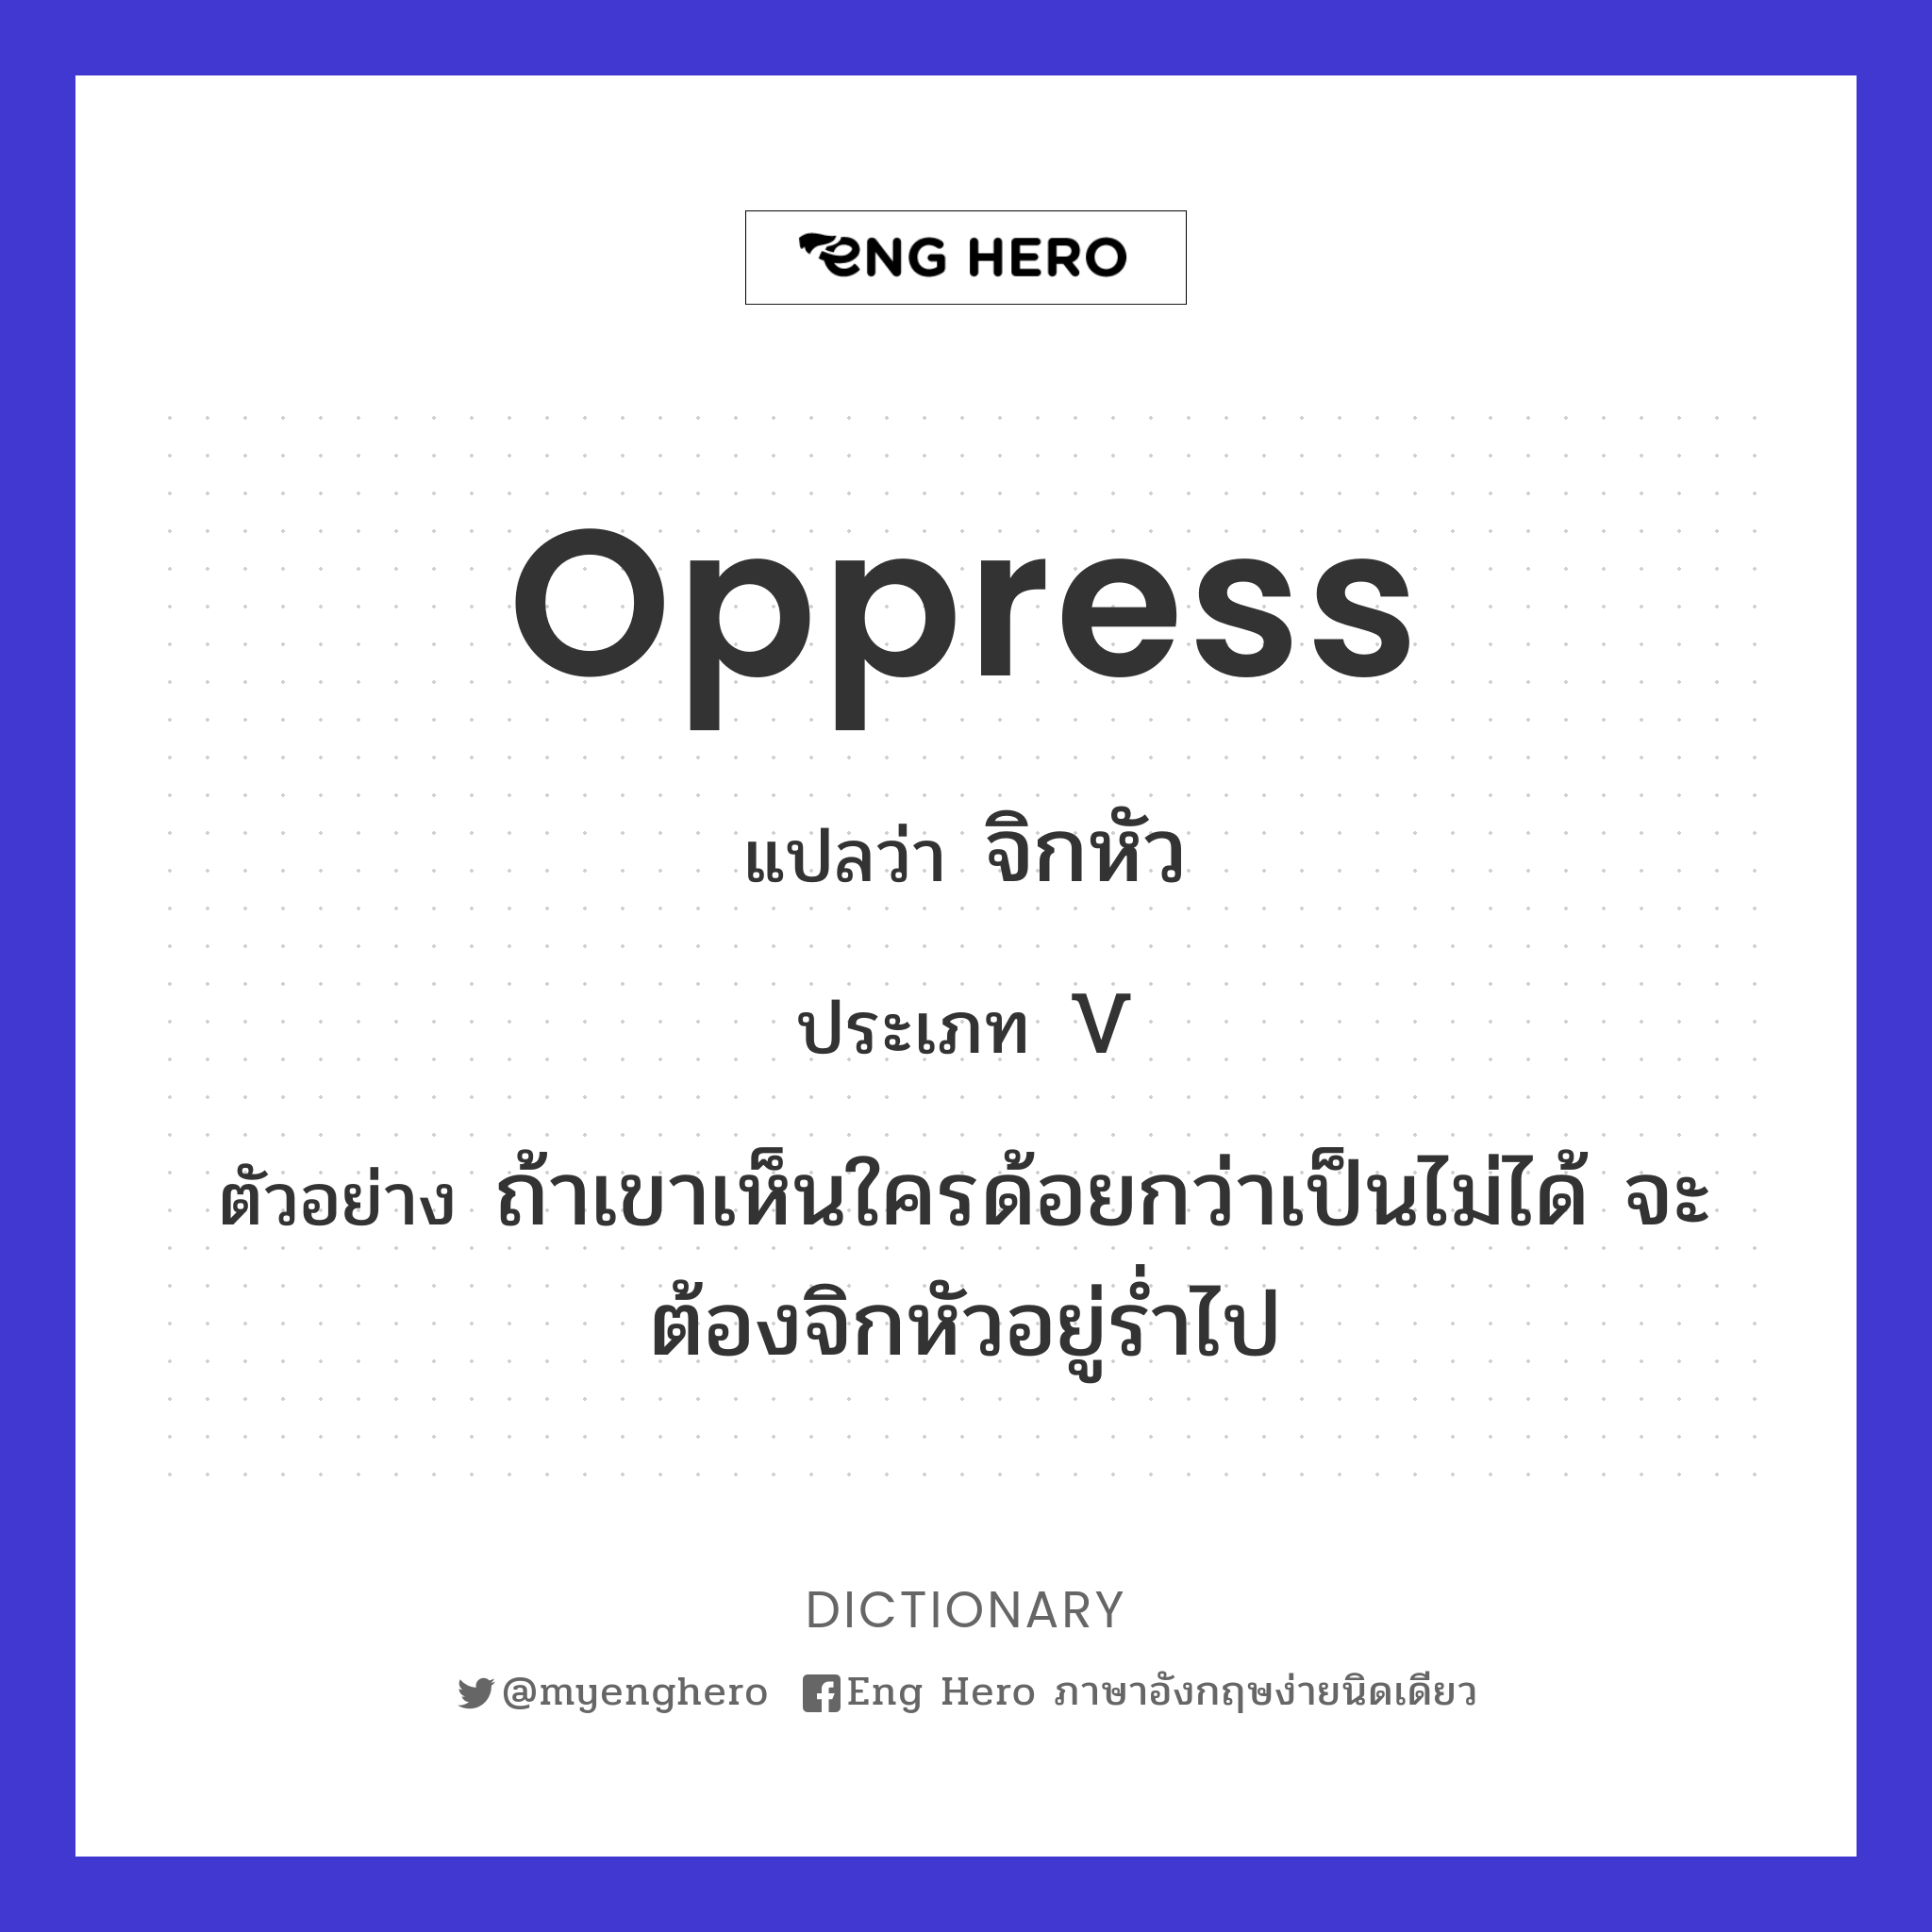 oppress